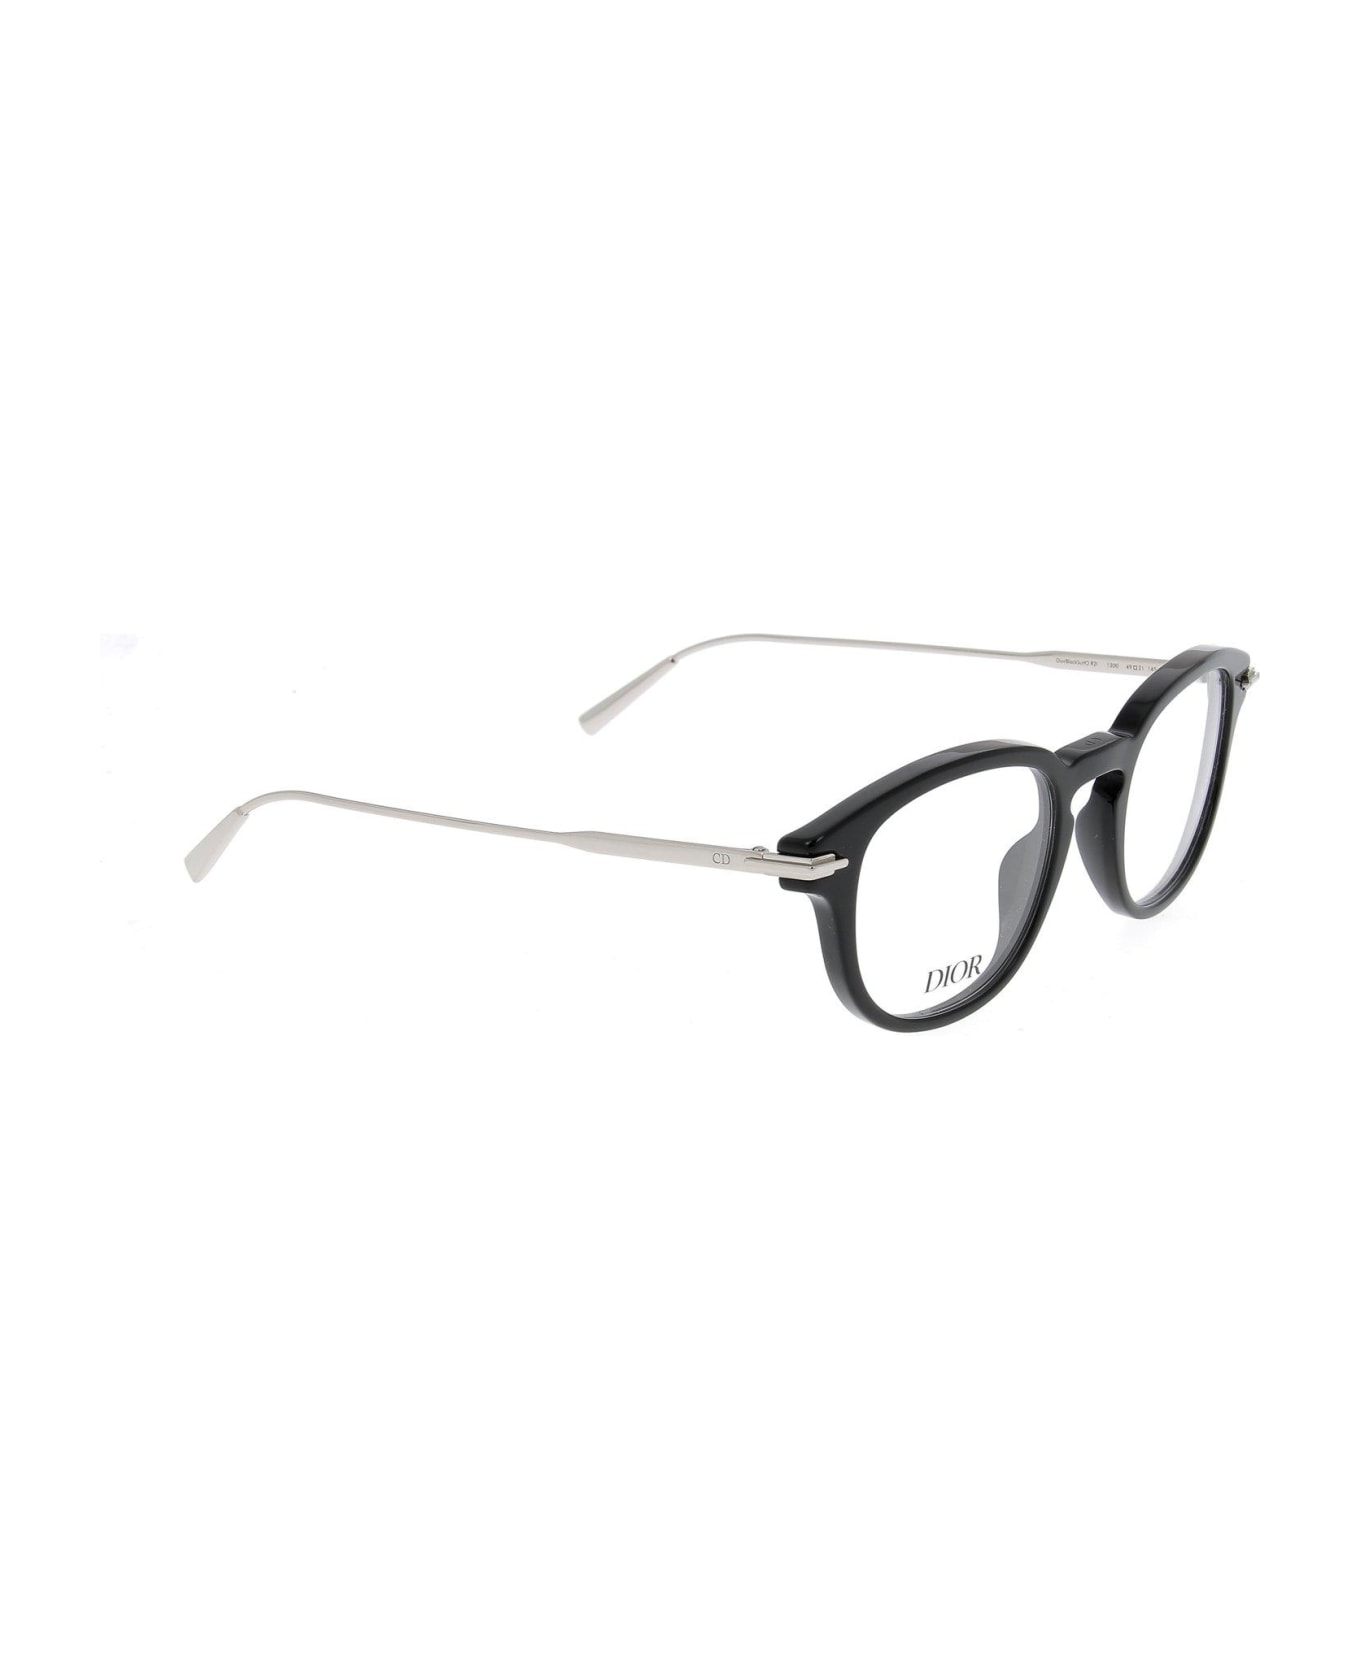 Dior Eyewear Oval-frame Glasses - 1300